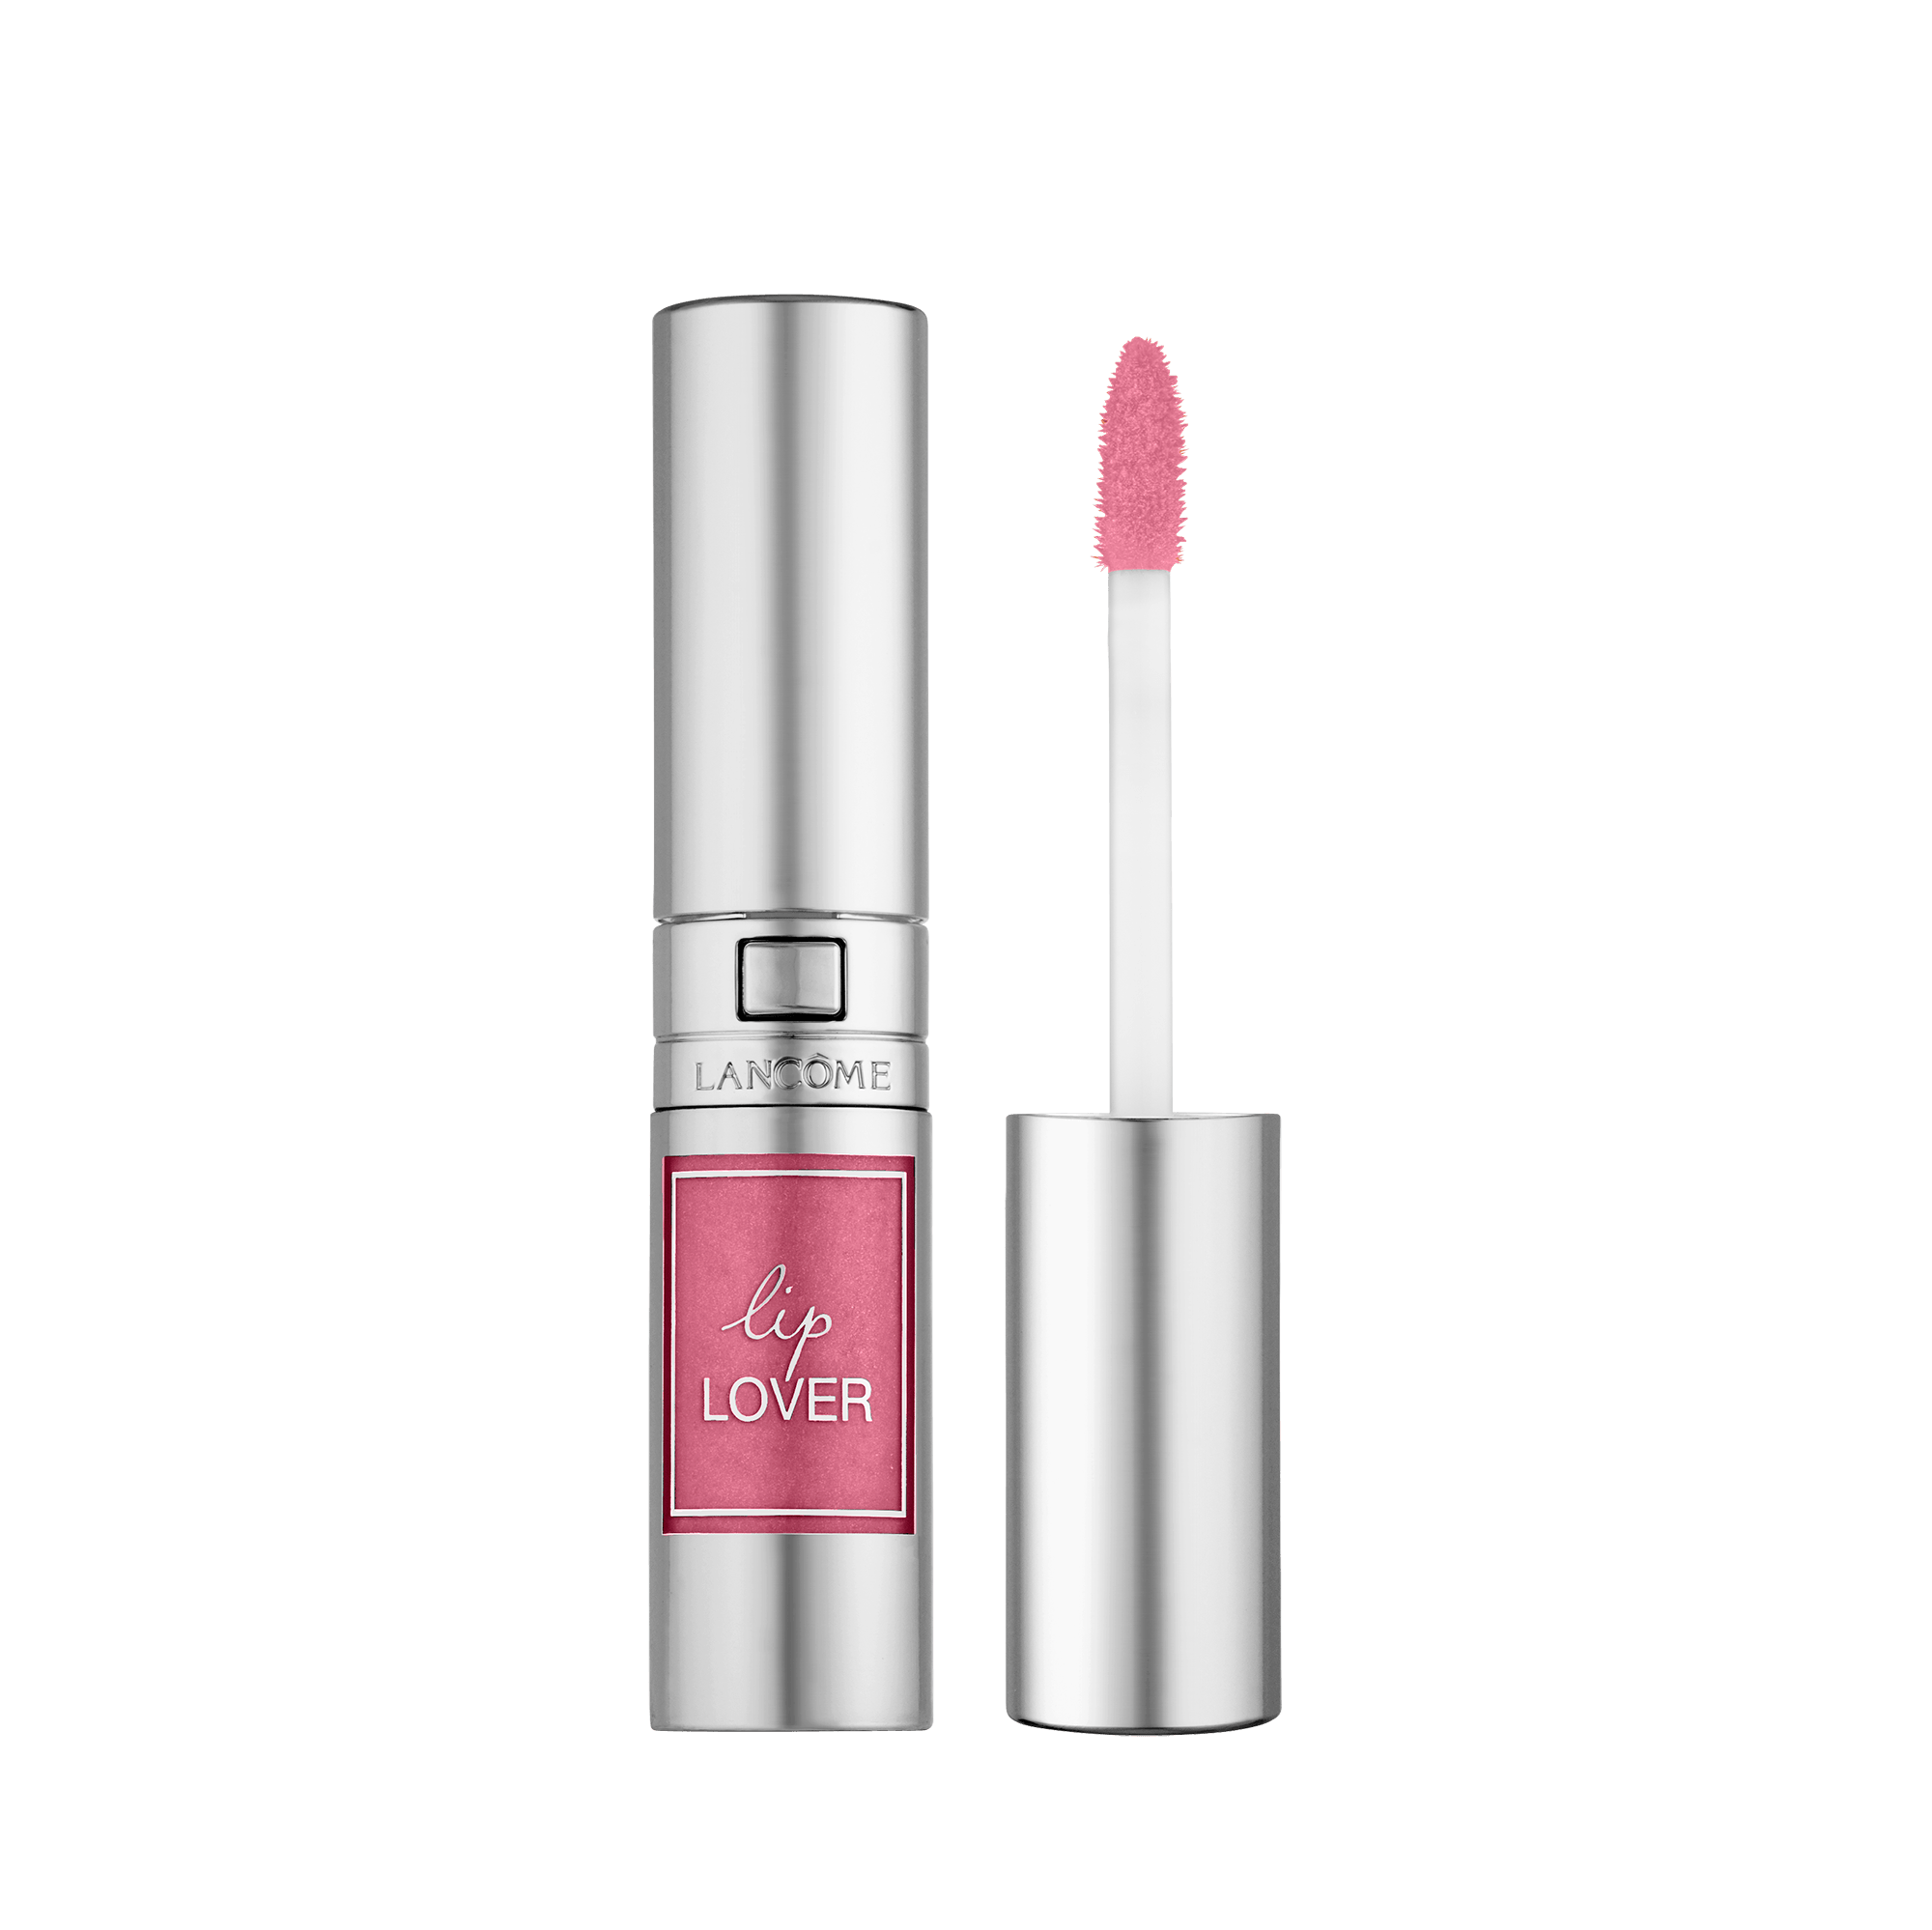 Lancôme Lip Lover lipgloss 316 Rose Attrape-cœur